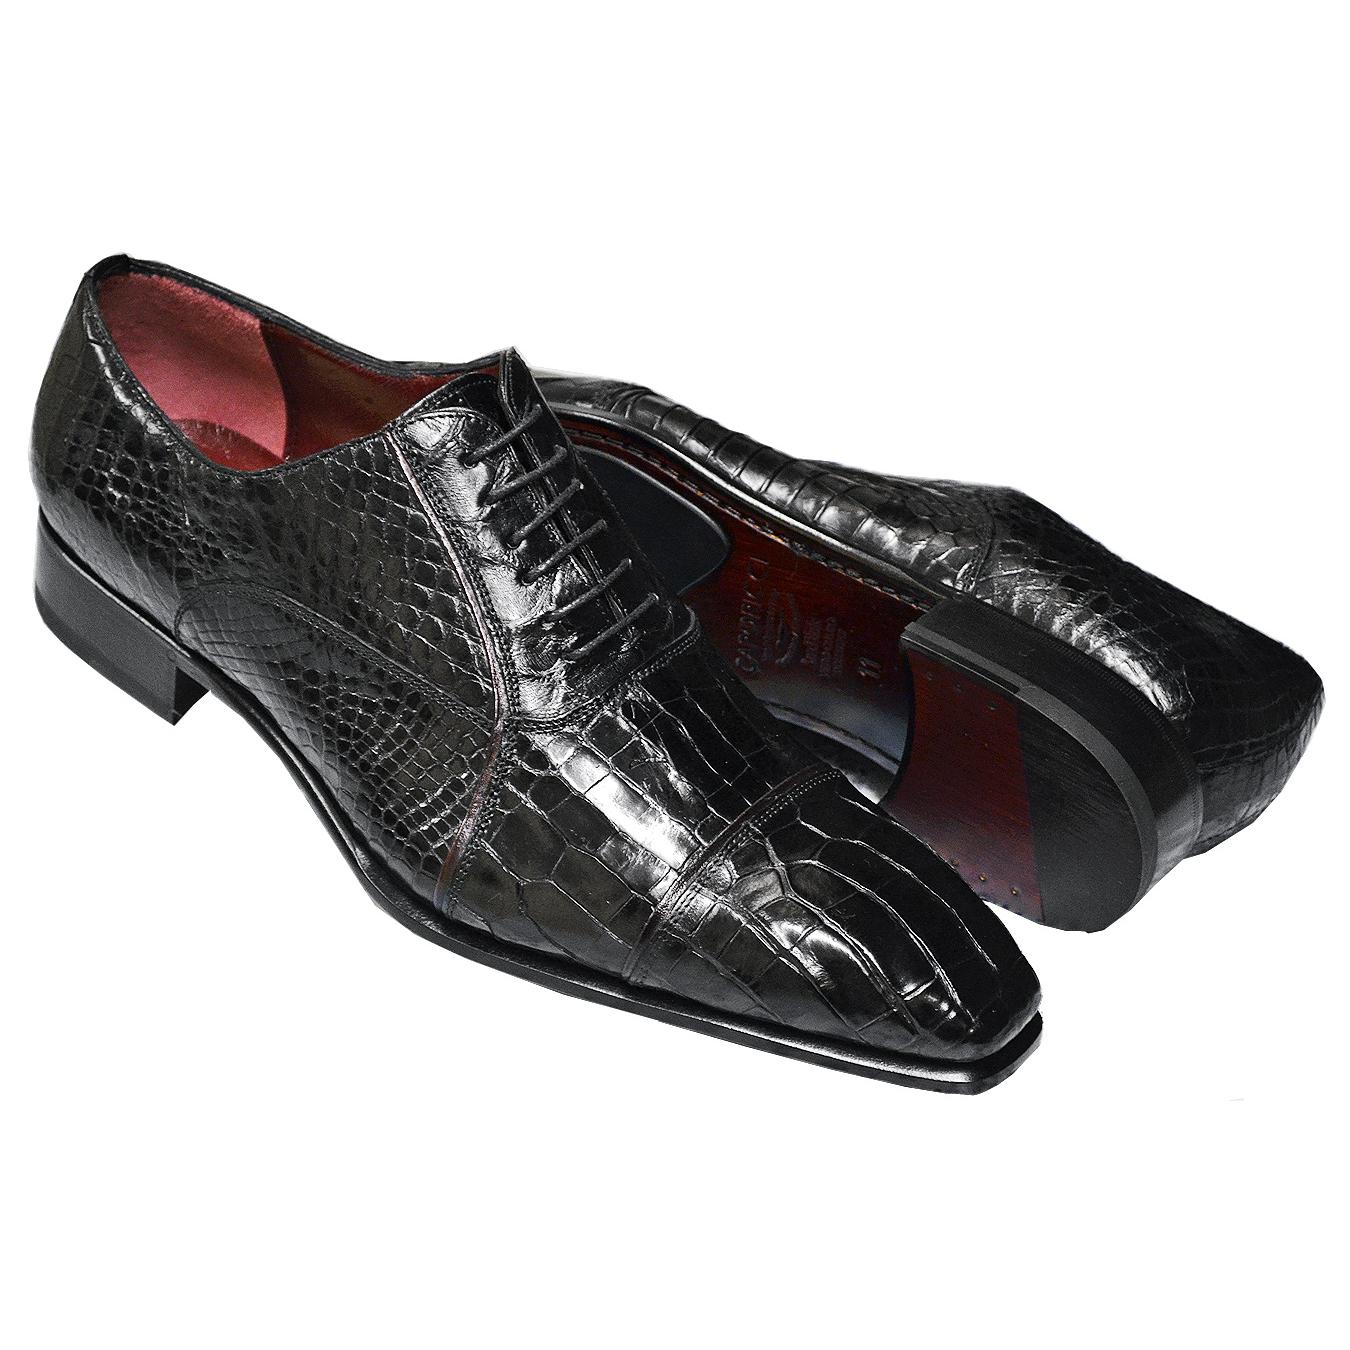 caporicci alligator shoes